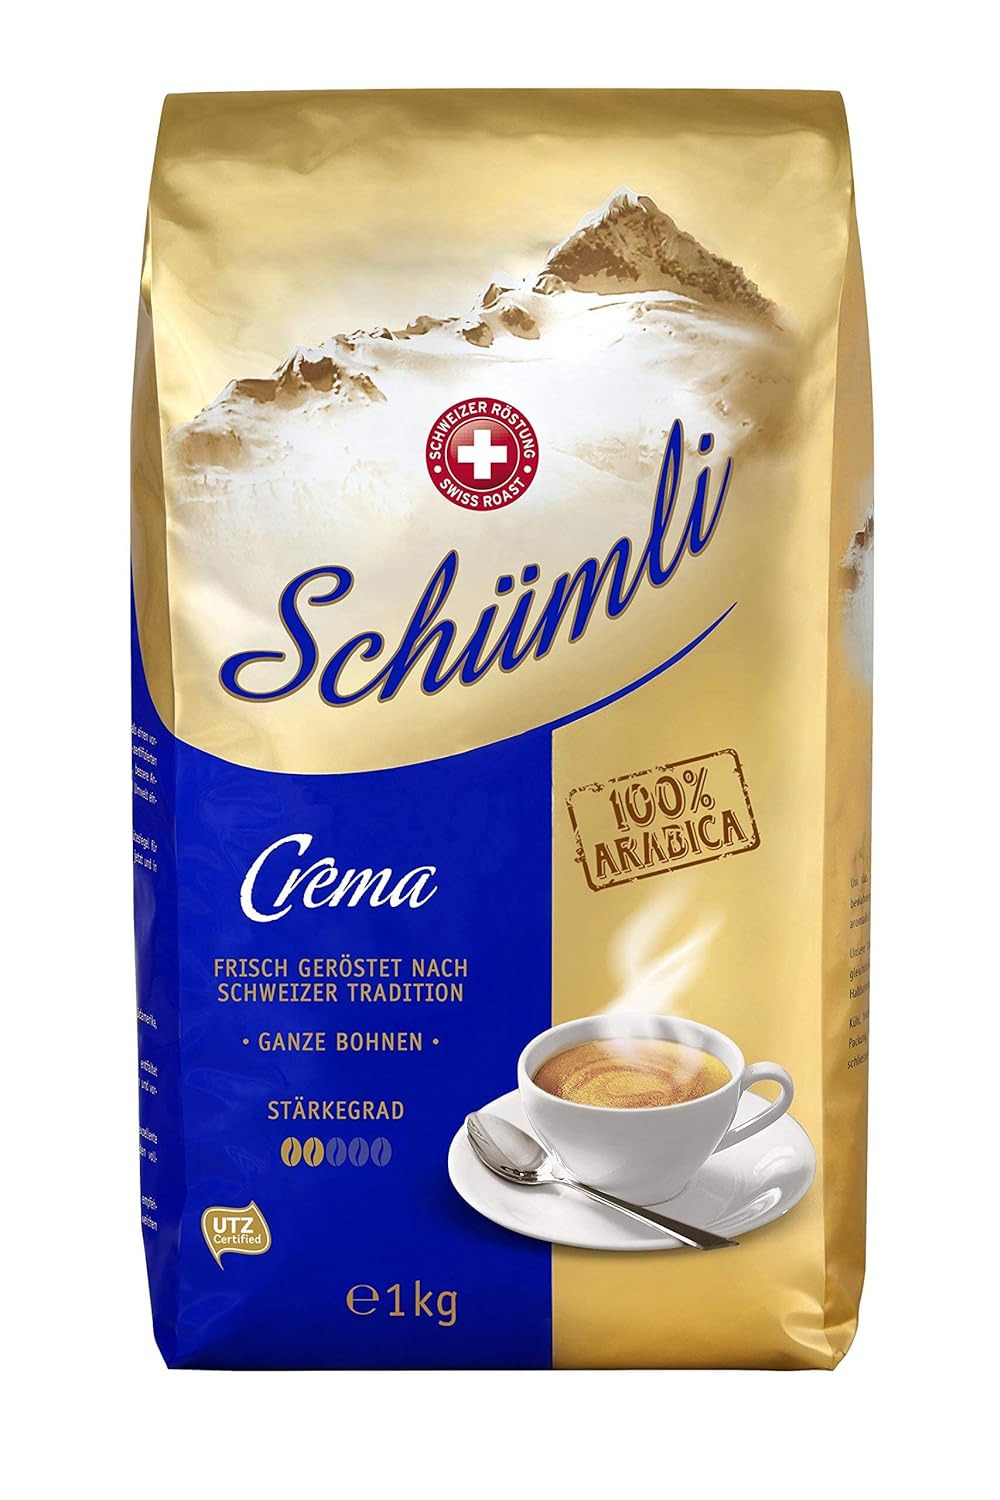 Schümli Crema Whole Coffee Beans 1 kg - Strength Level 2/5 - Utz Certified | 1 kg (Pack of 1)